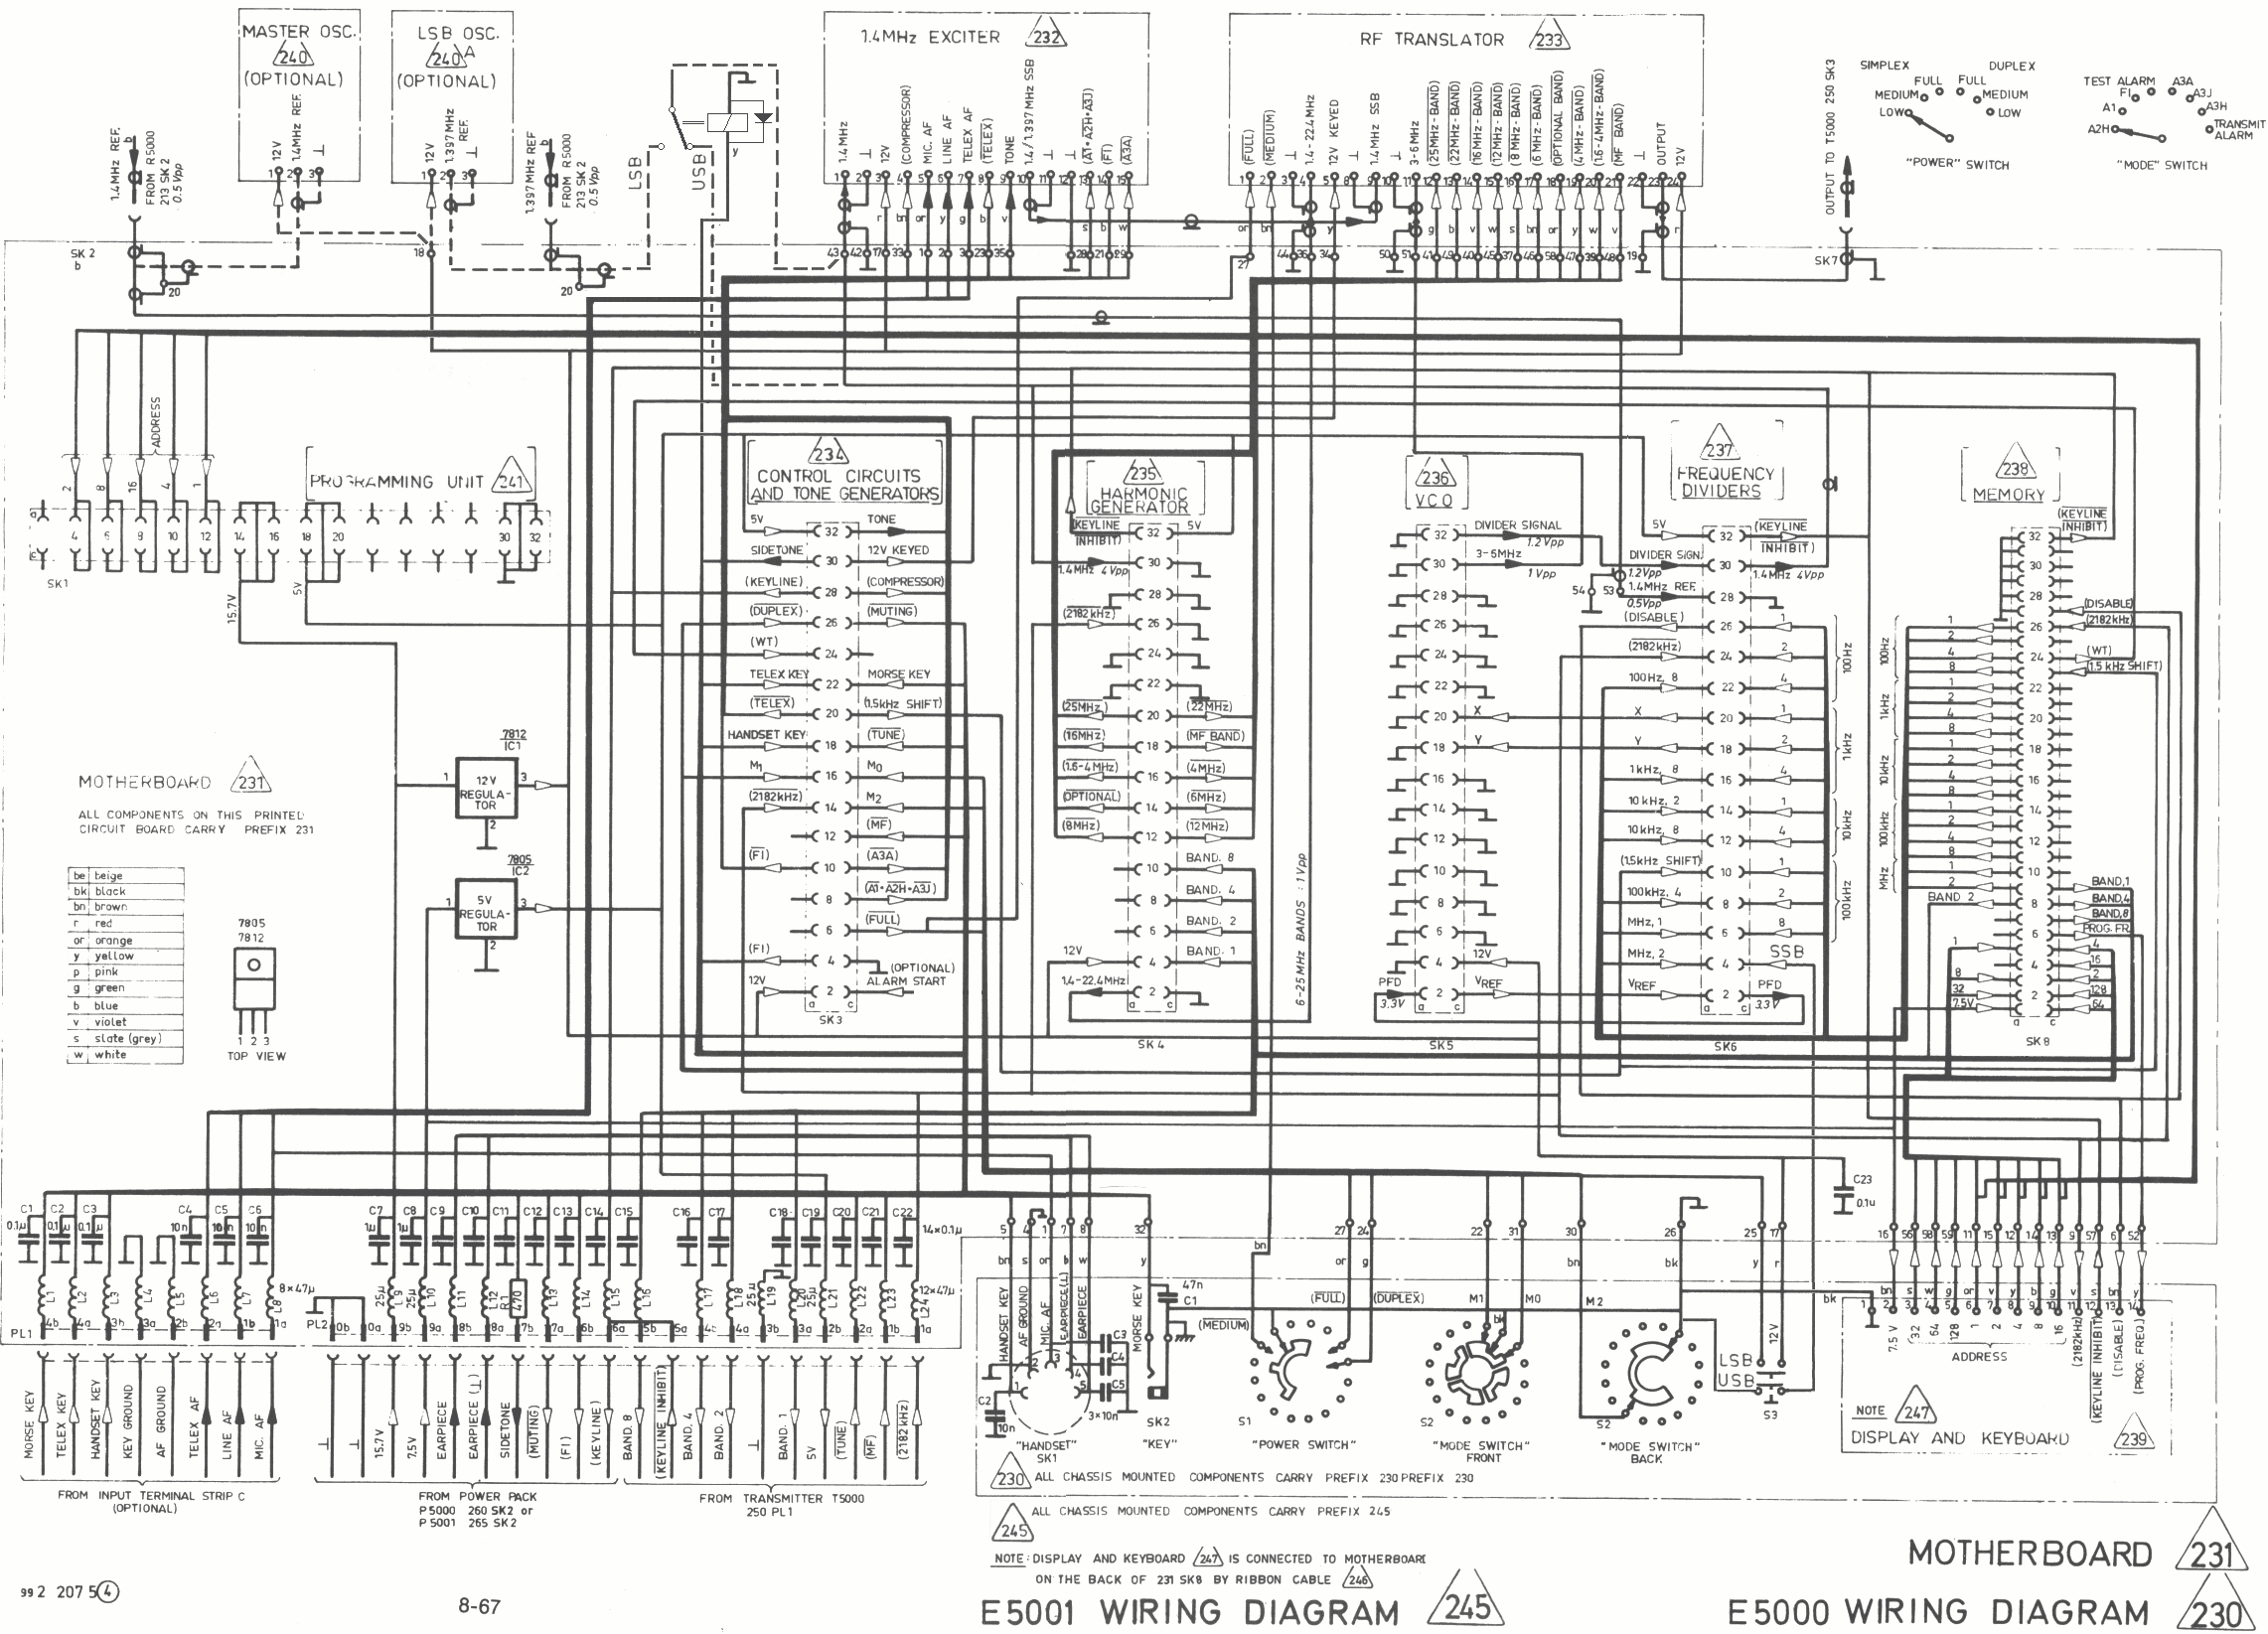 Motherboard Wiring Diagram from www.qsl.net